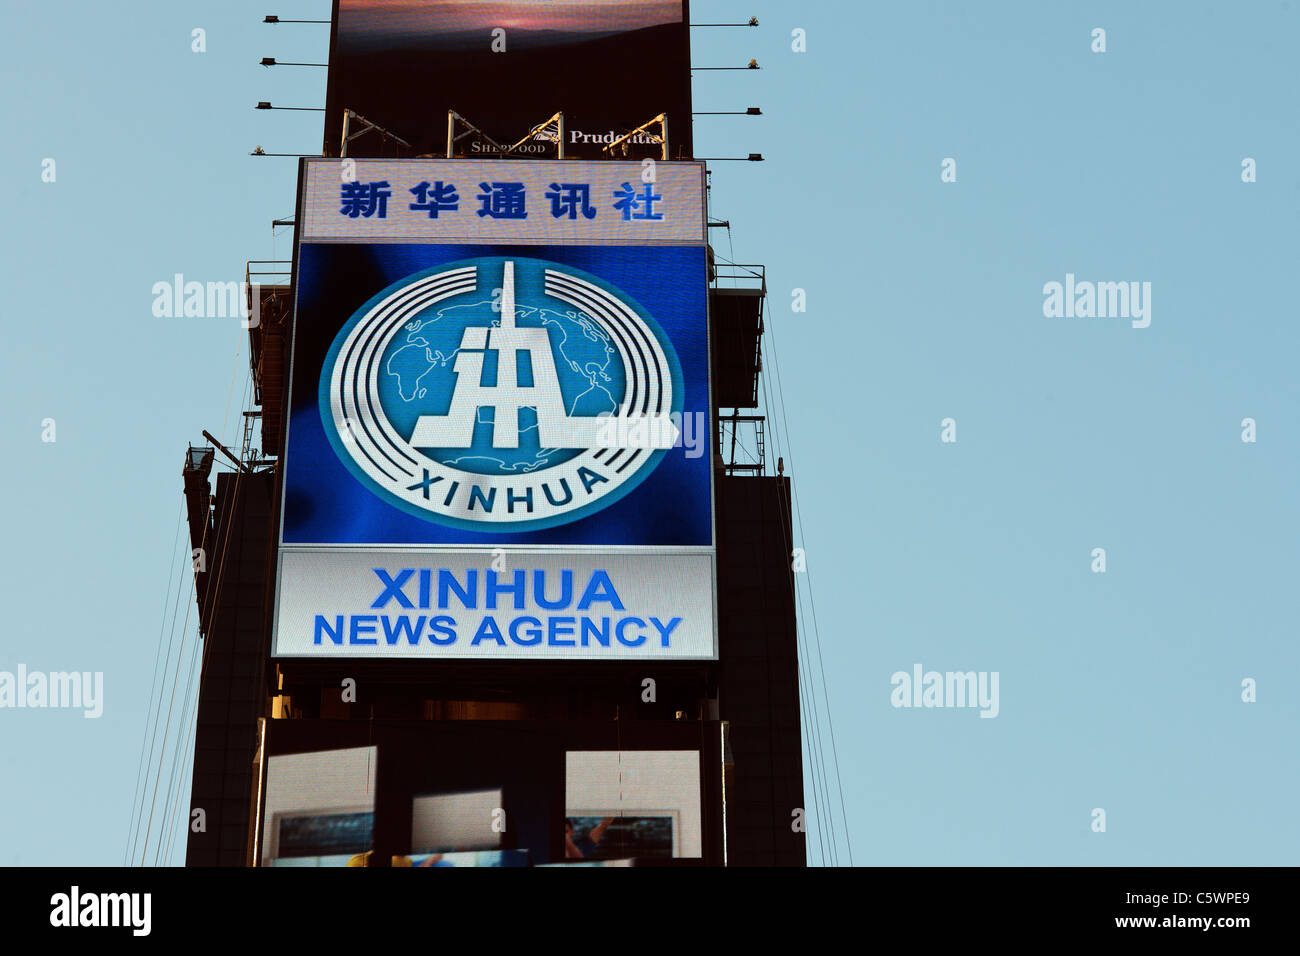 News agency xinhua Xinhua News